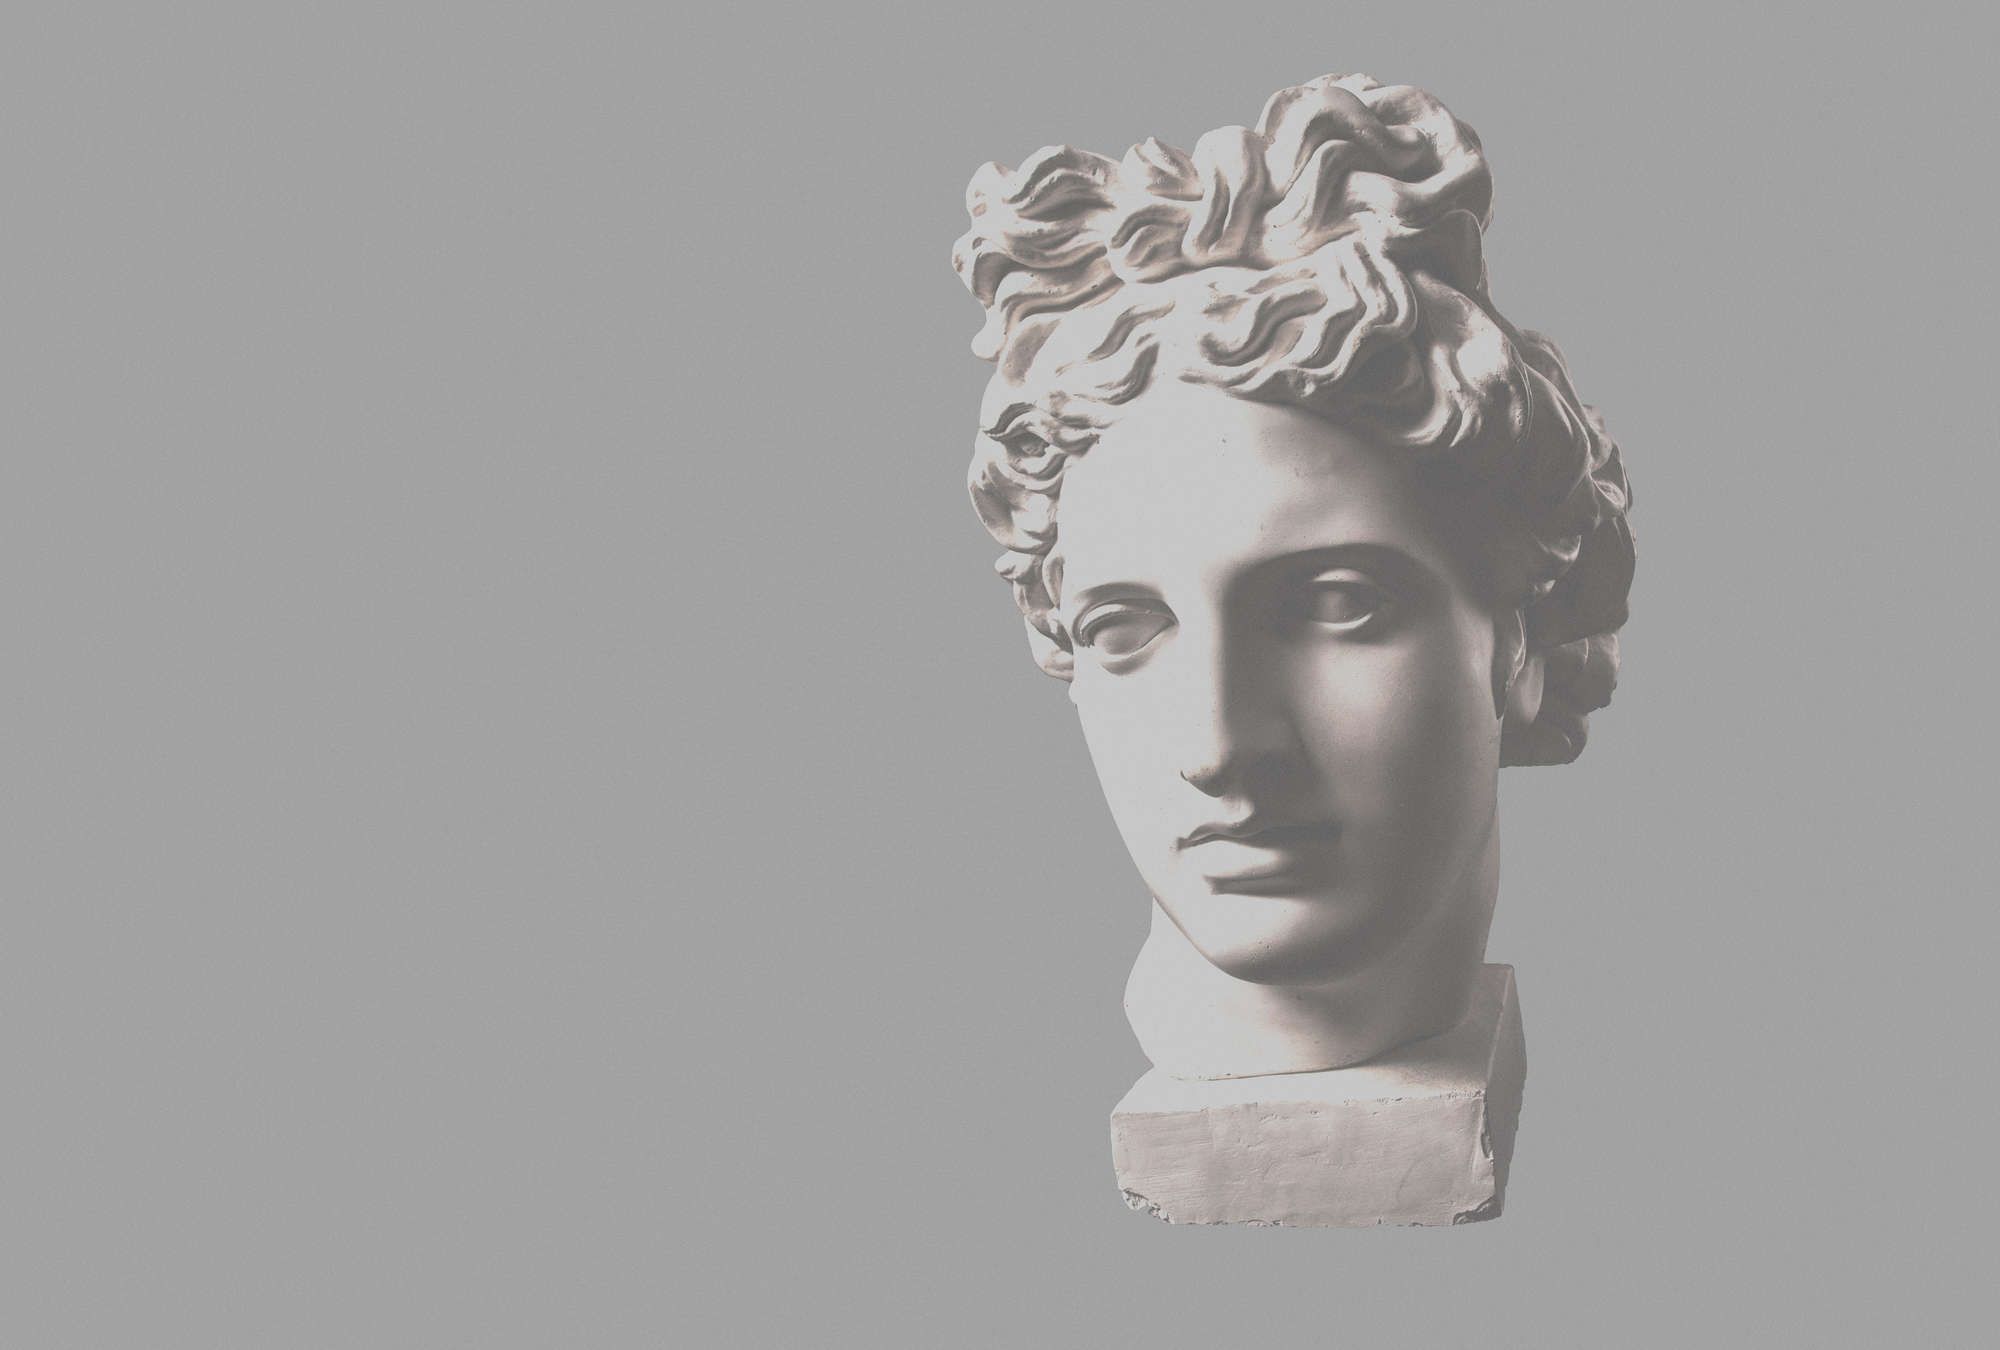             Fotomural »venus« - busto femenino antiguo - tejido no tejido, liso, mate
        